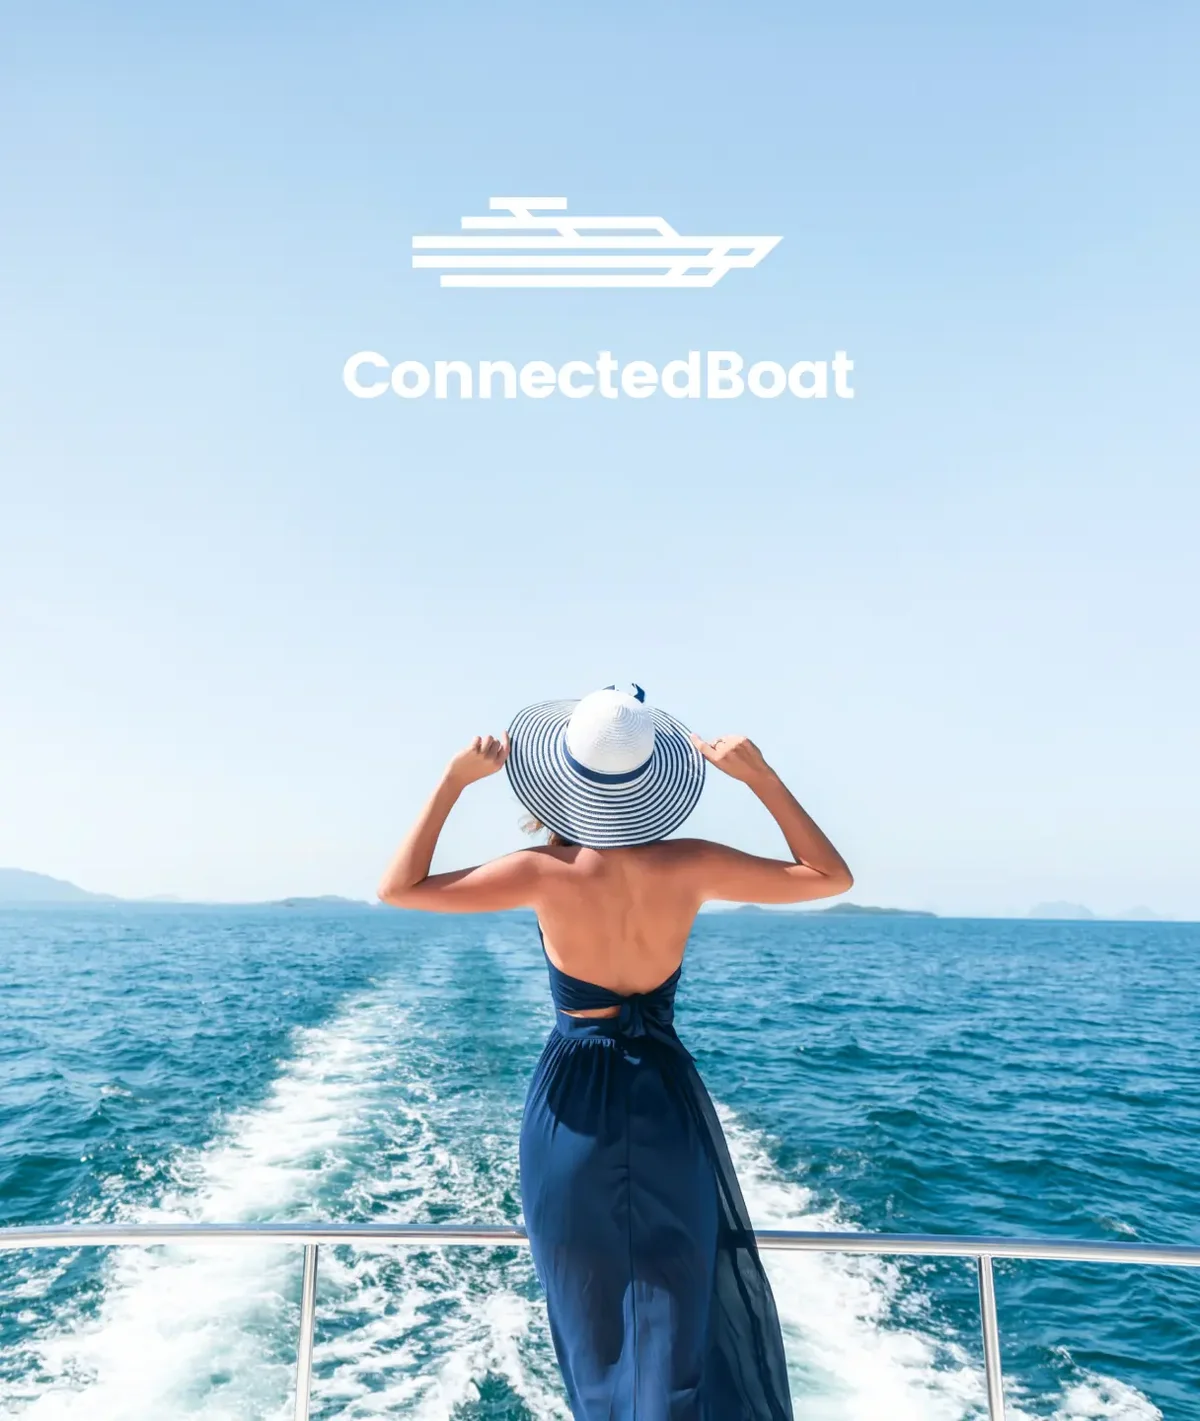 Boat fleet management & marine telematics platform for ConnectedBoat